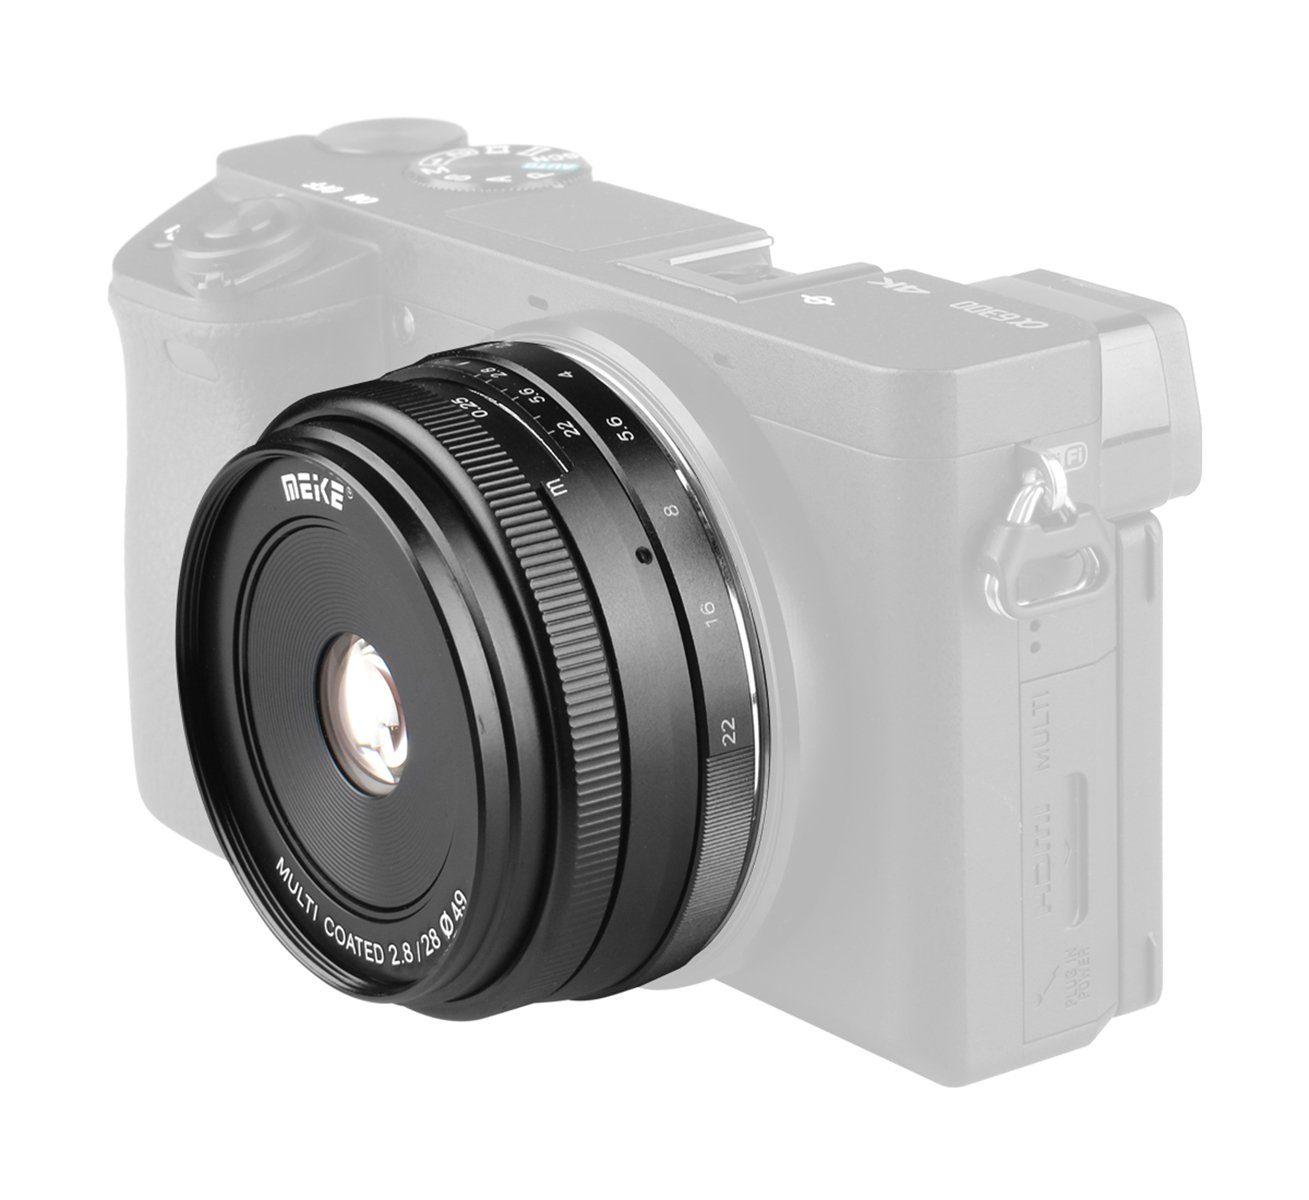 Meike Meike 28mm F2.8 Objektiv multicoated Objektiv Canon EOS für M